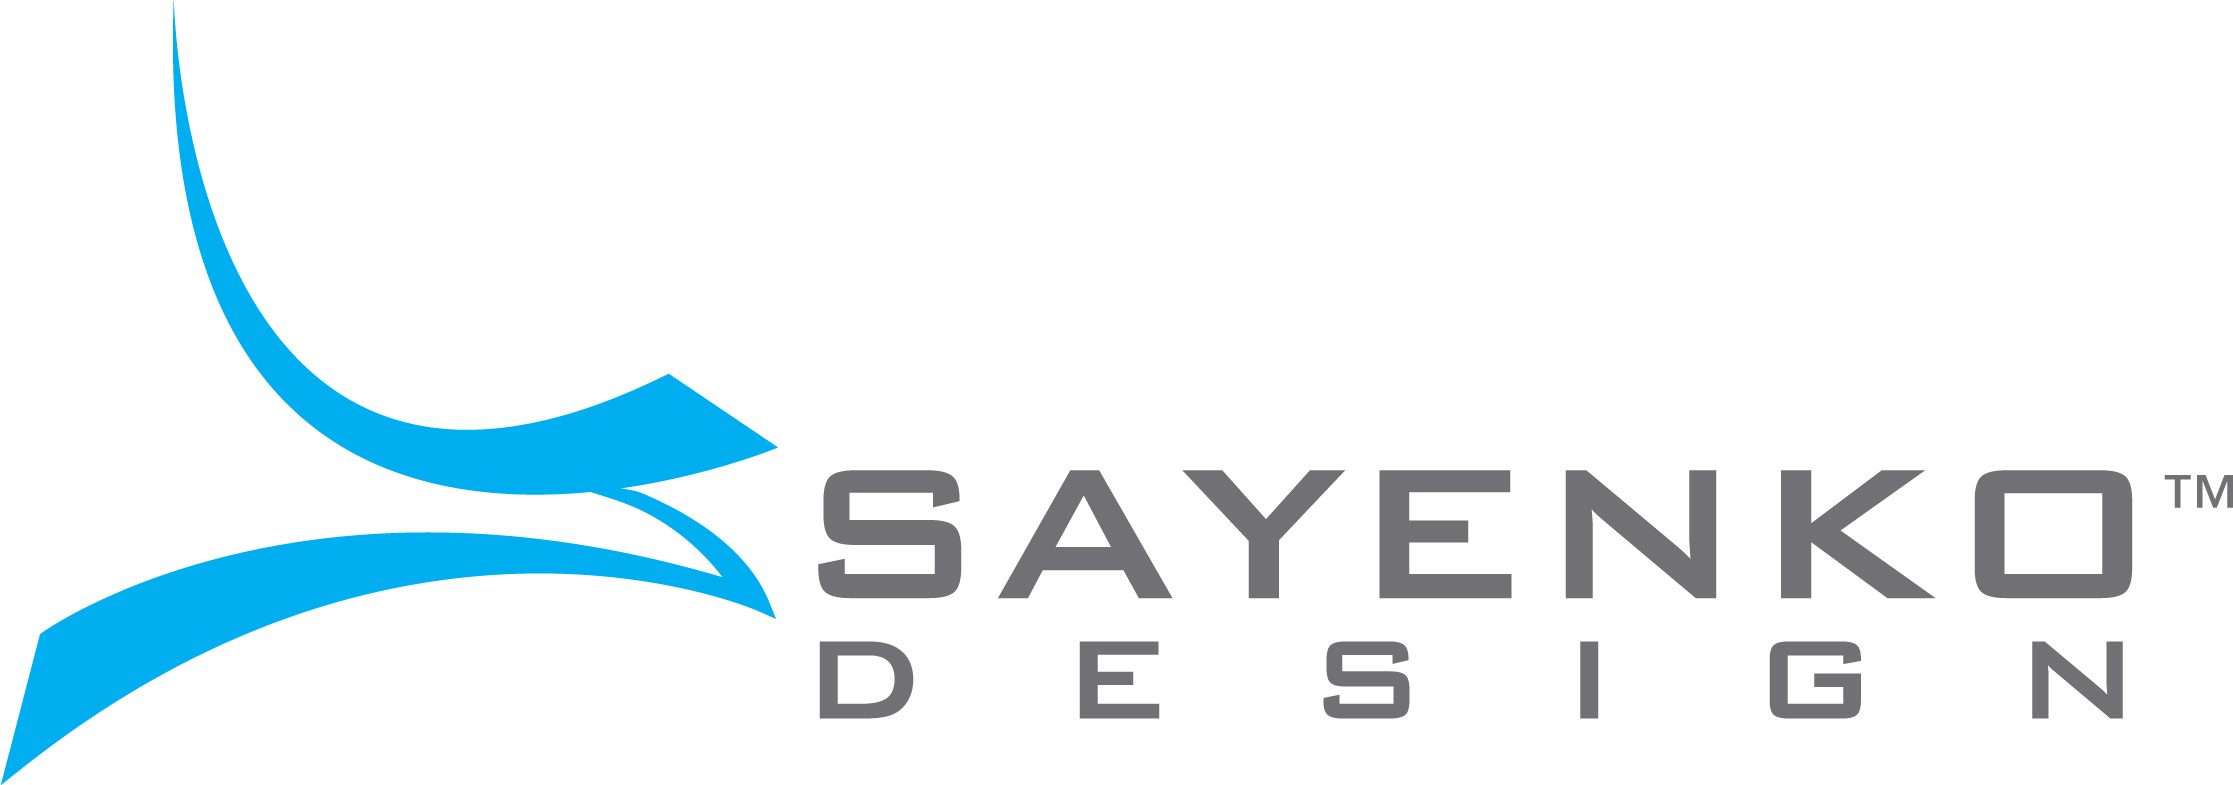 Top Seattle Web Development Company Logo: Sayenko Design